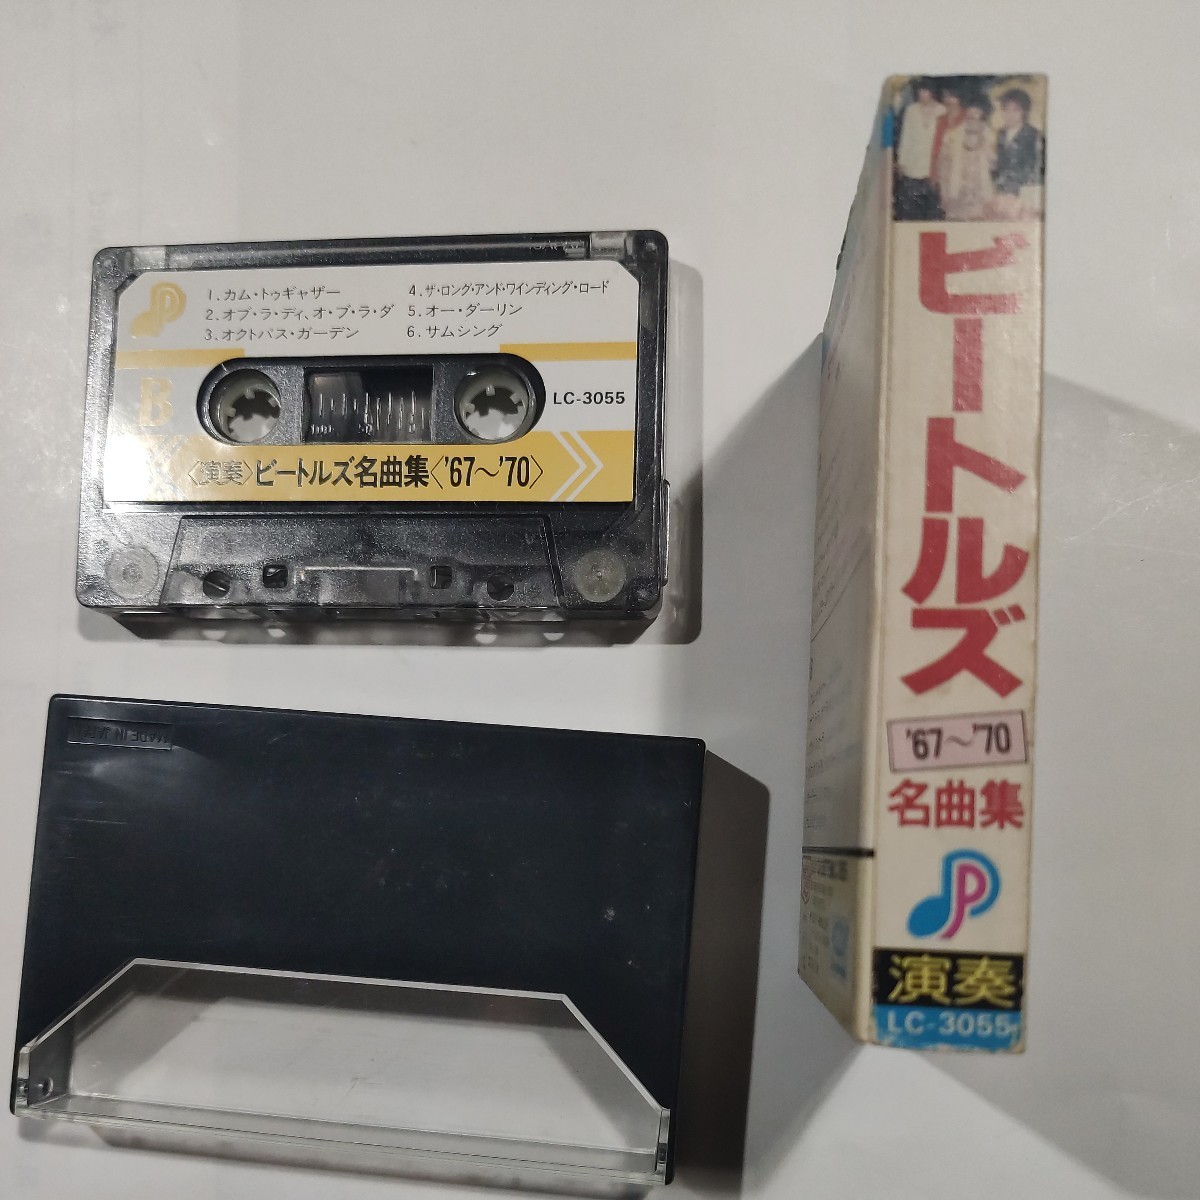 LC-3055 Pachi son Beatles *67~*70 шедевр сборник кассетная лента 